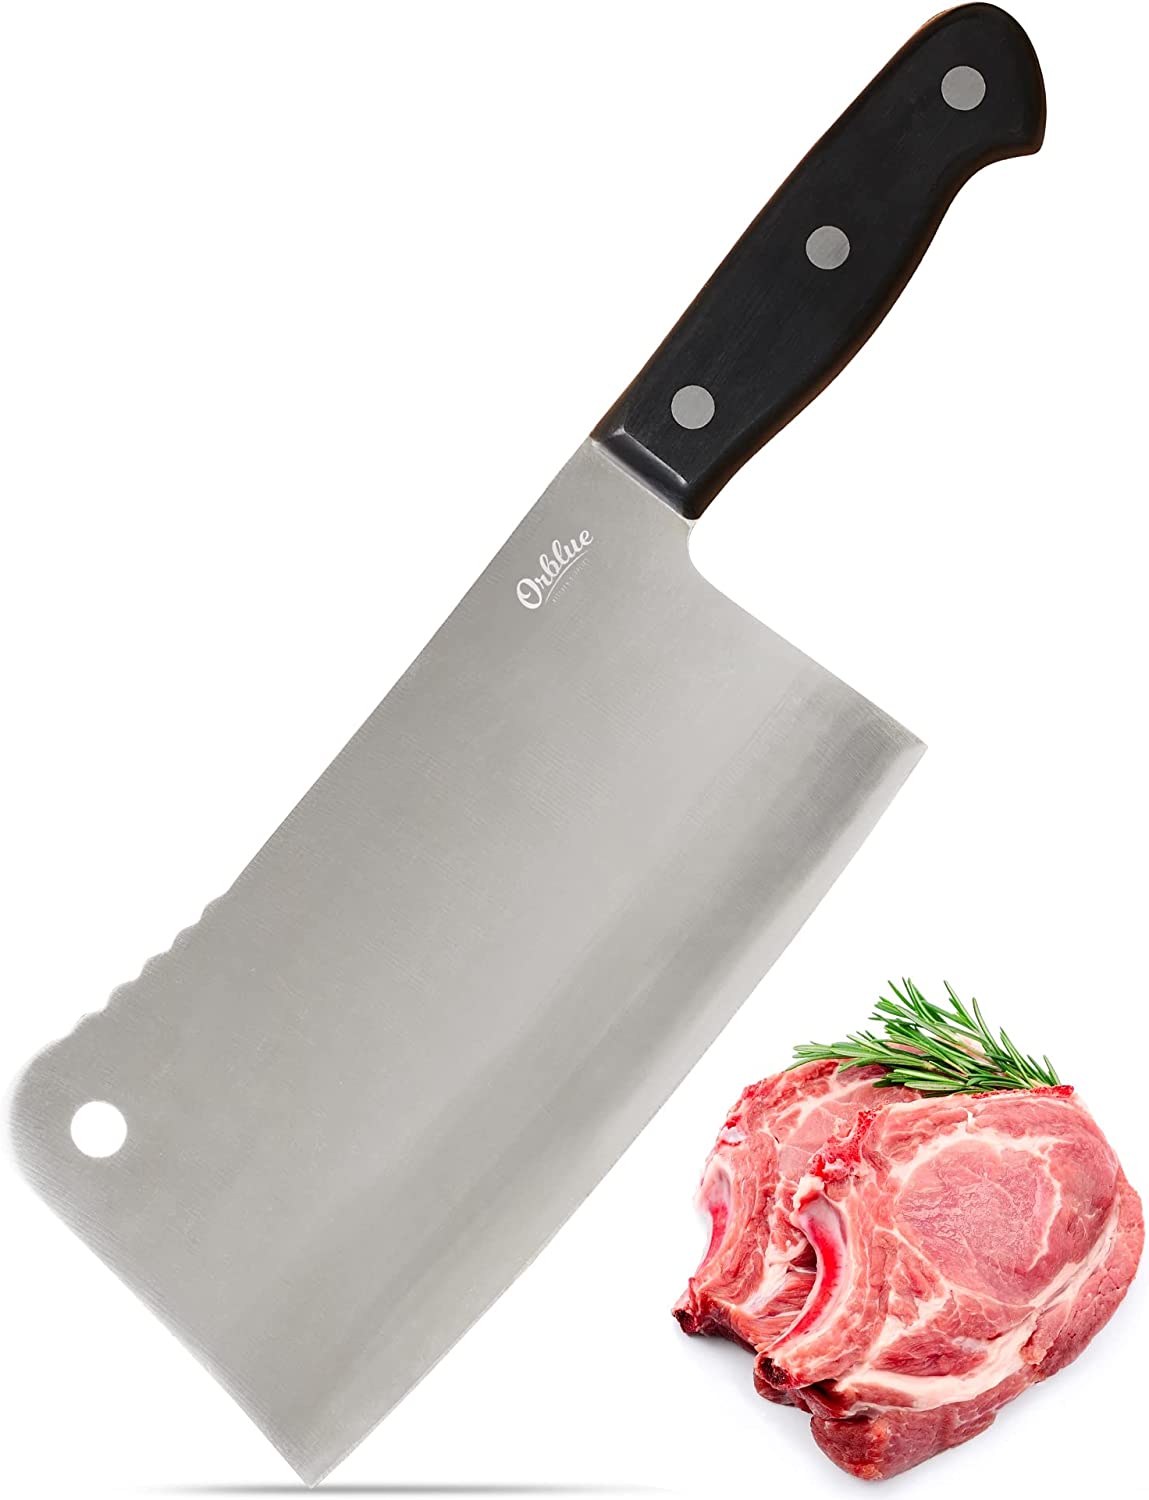 Farberware Edgekeeper Cleaver Knife with Self-Sharpening Sleeve - Black, 6  in - Food 4 Less